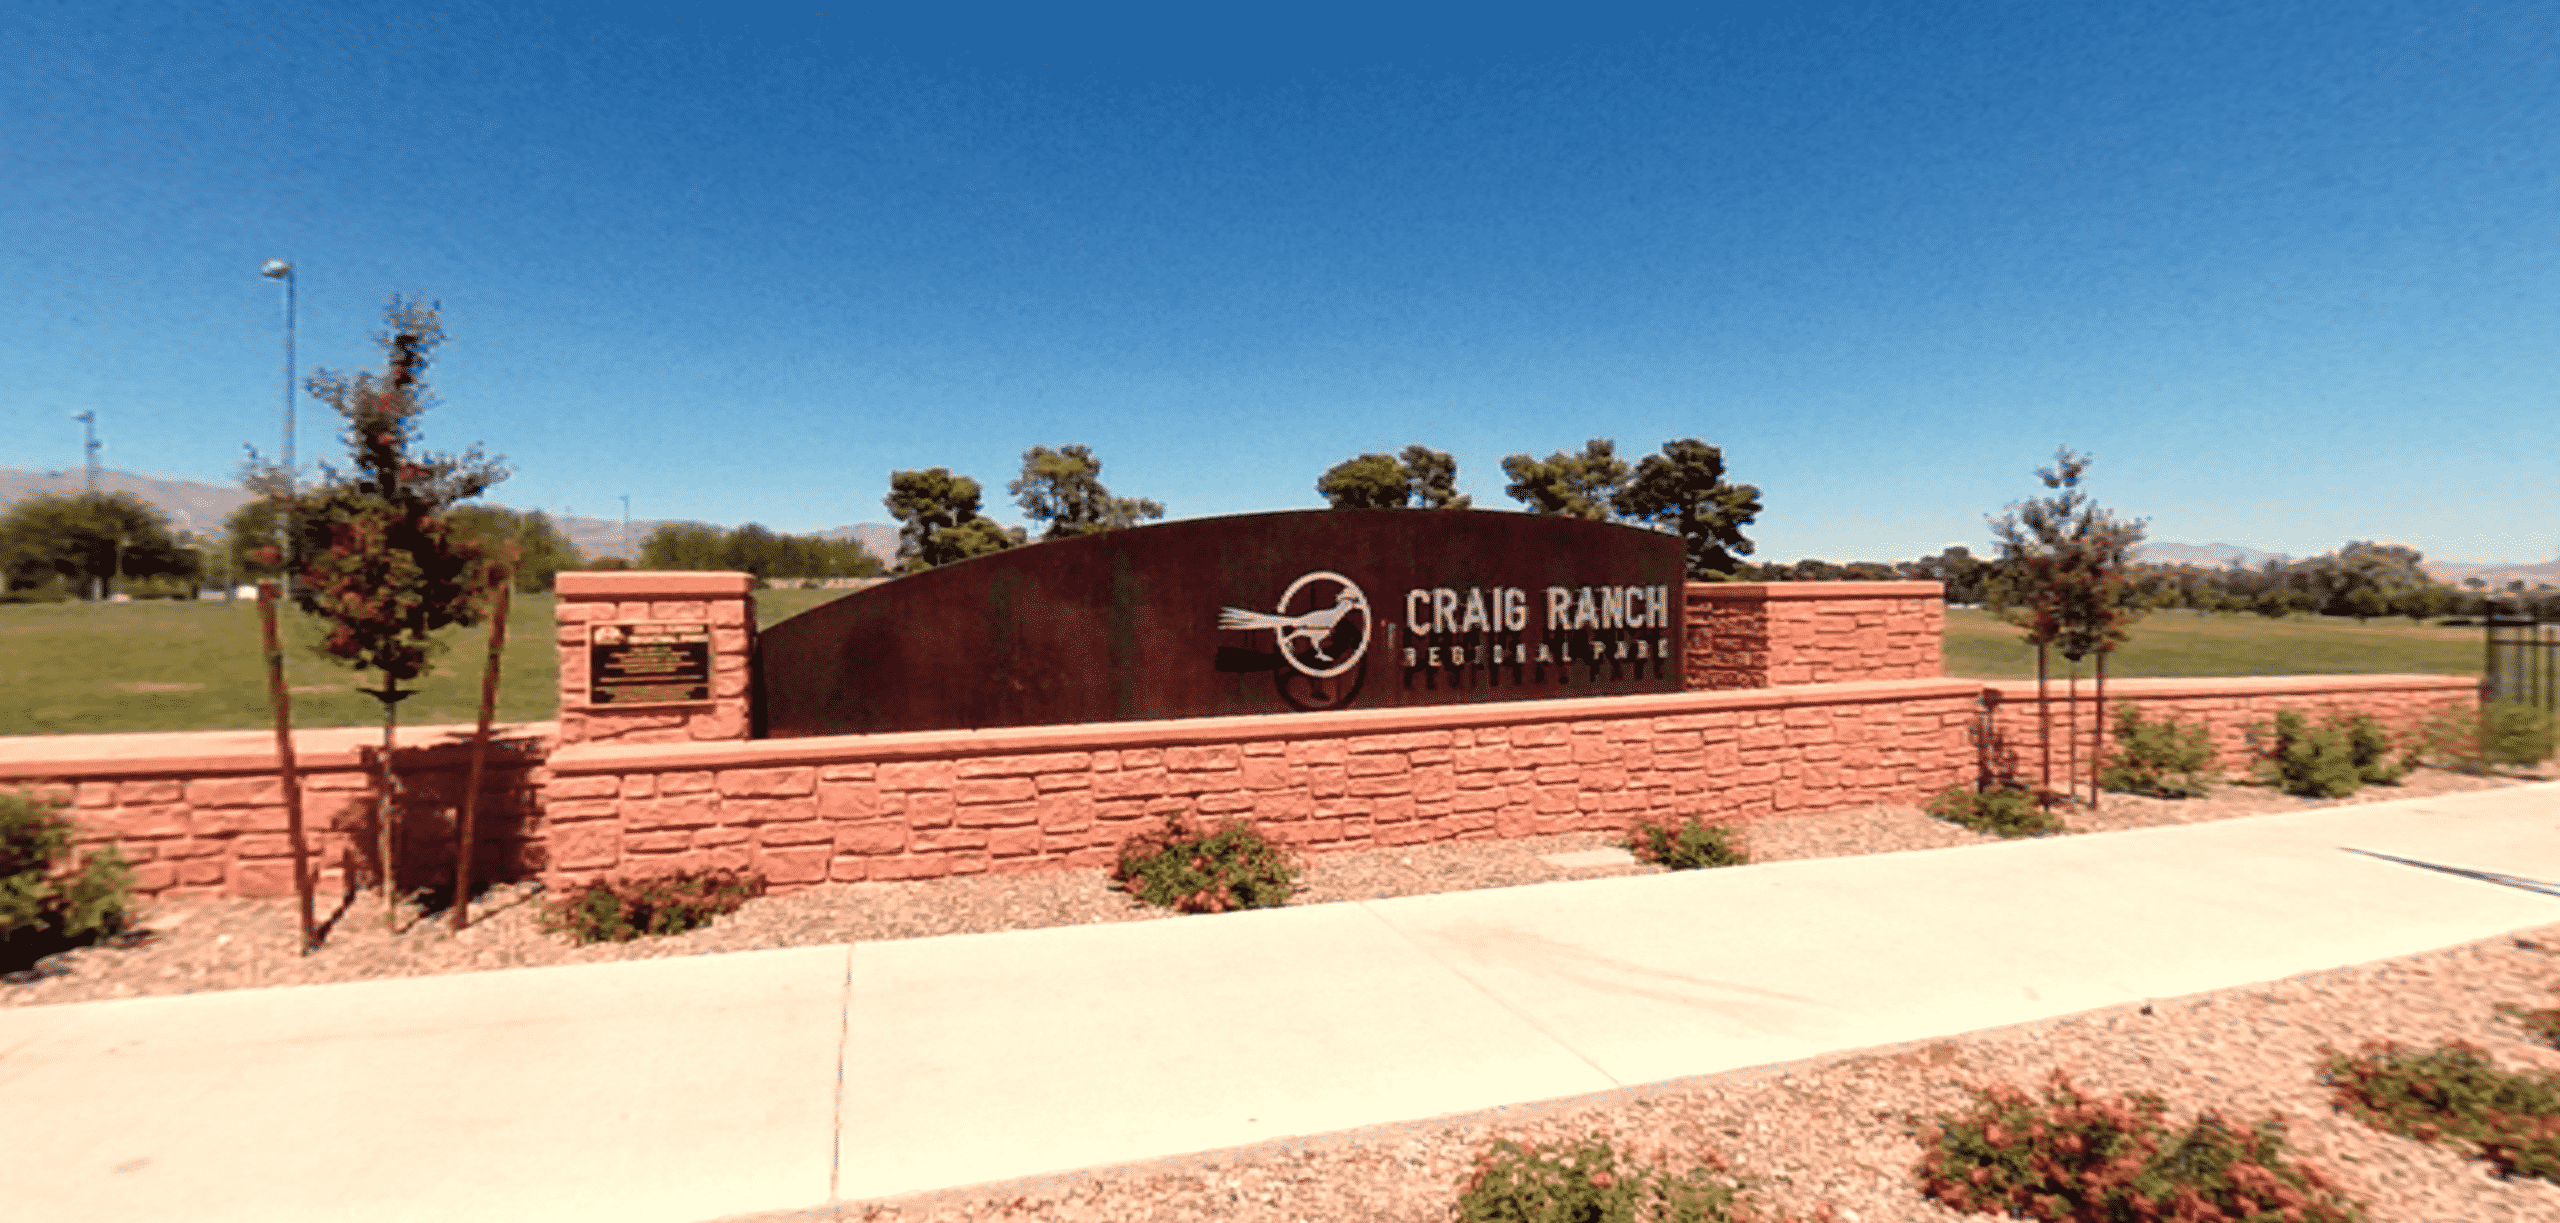 Craig Ranch Park